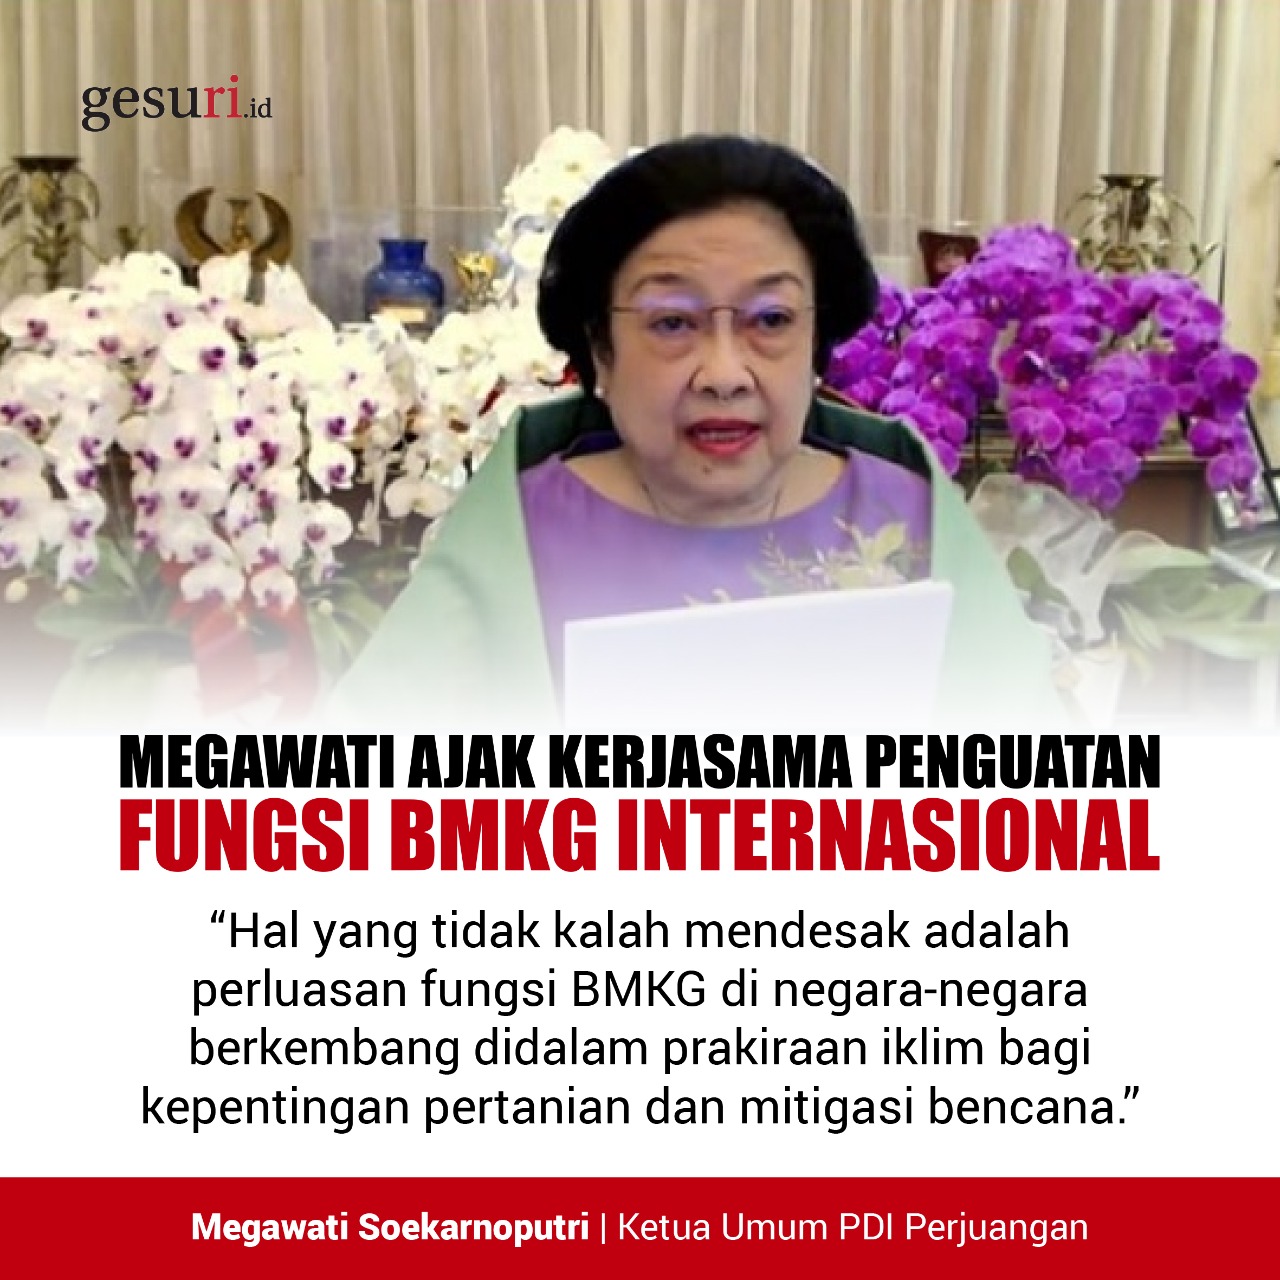 Megawati Ajak Kerjasama Penguatan BMKG Internasional (3/3)